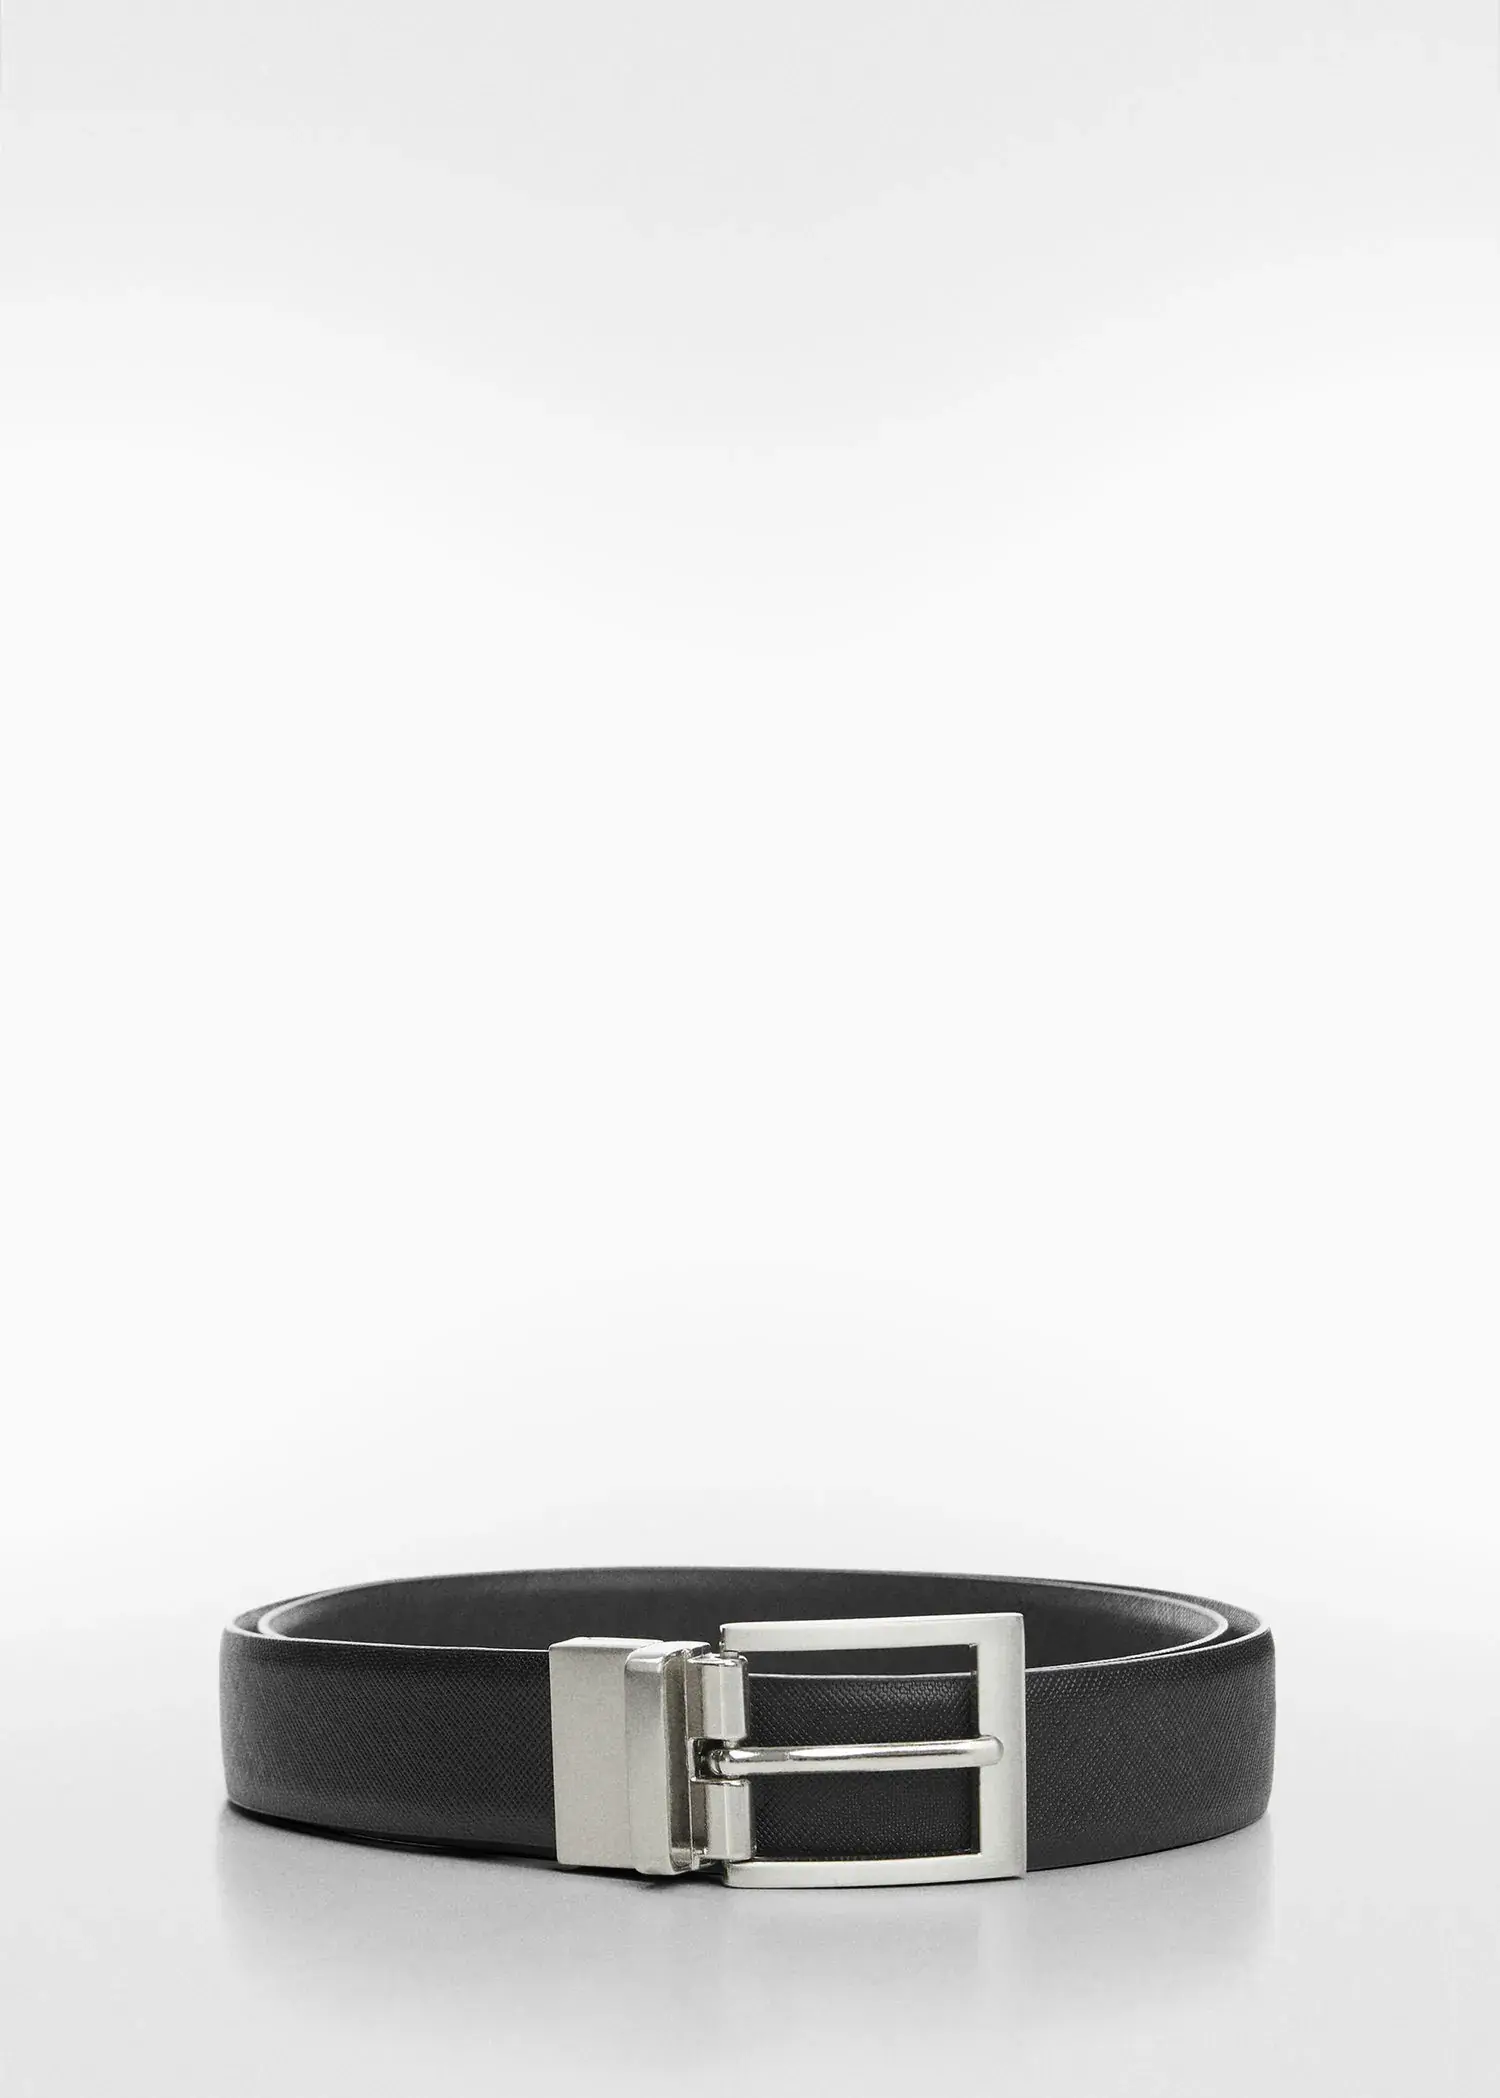 Mango Saffiano leather belt. 1